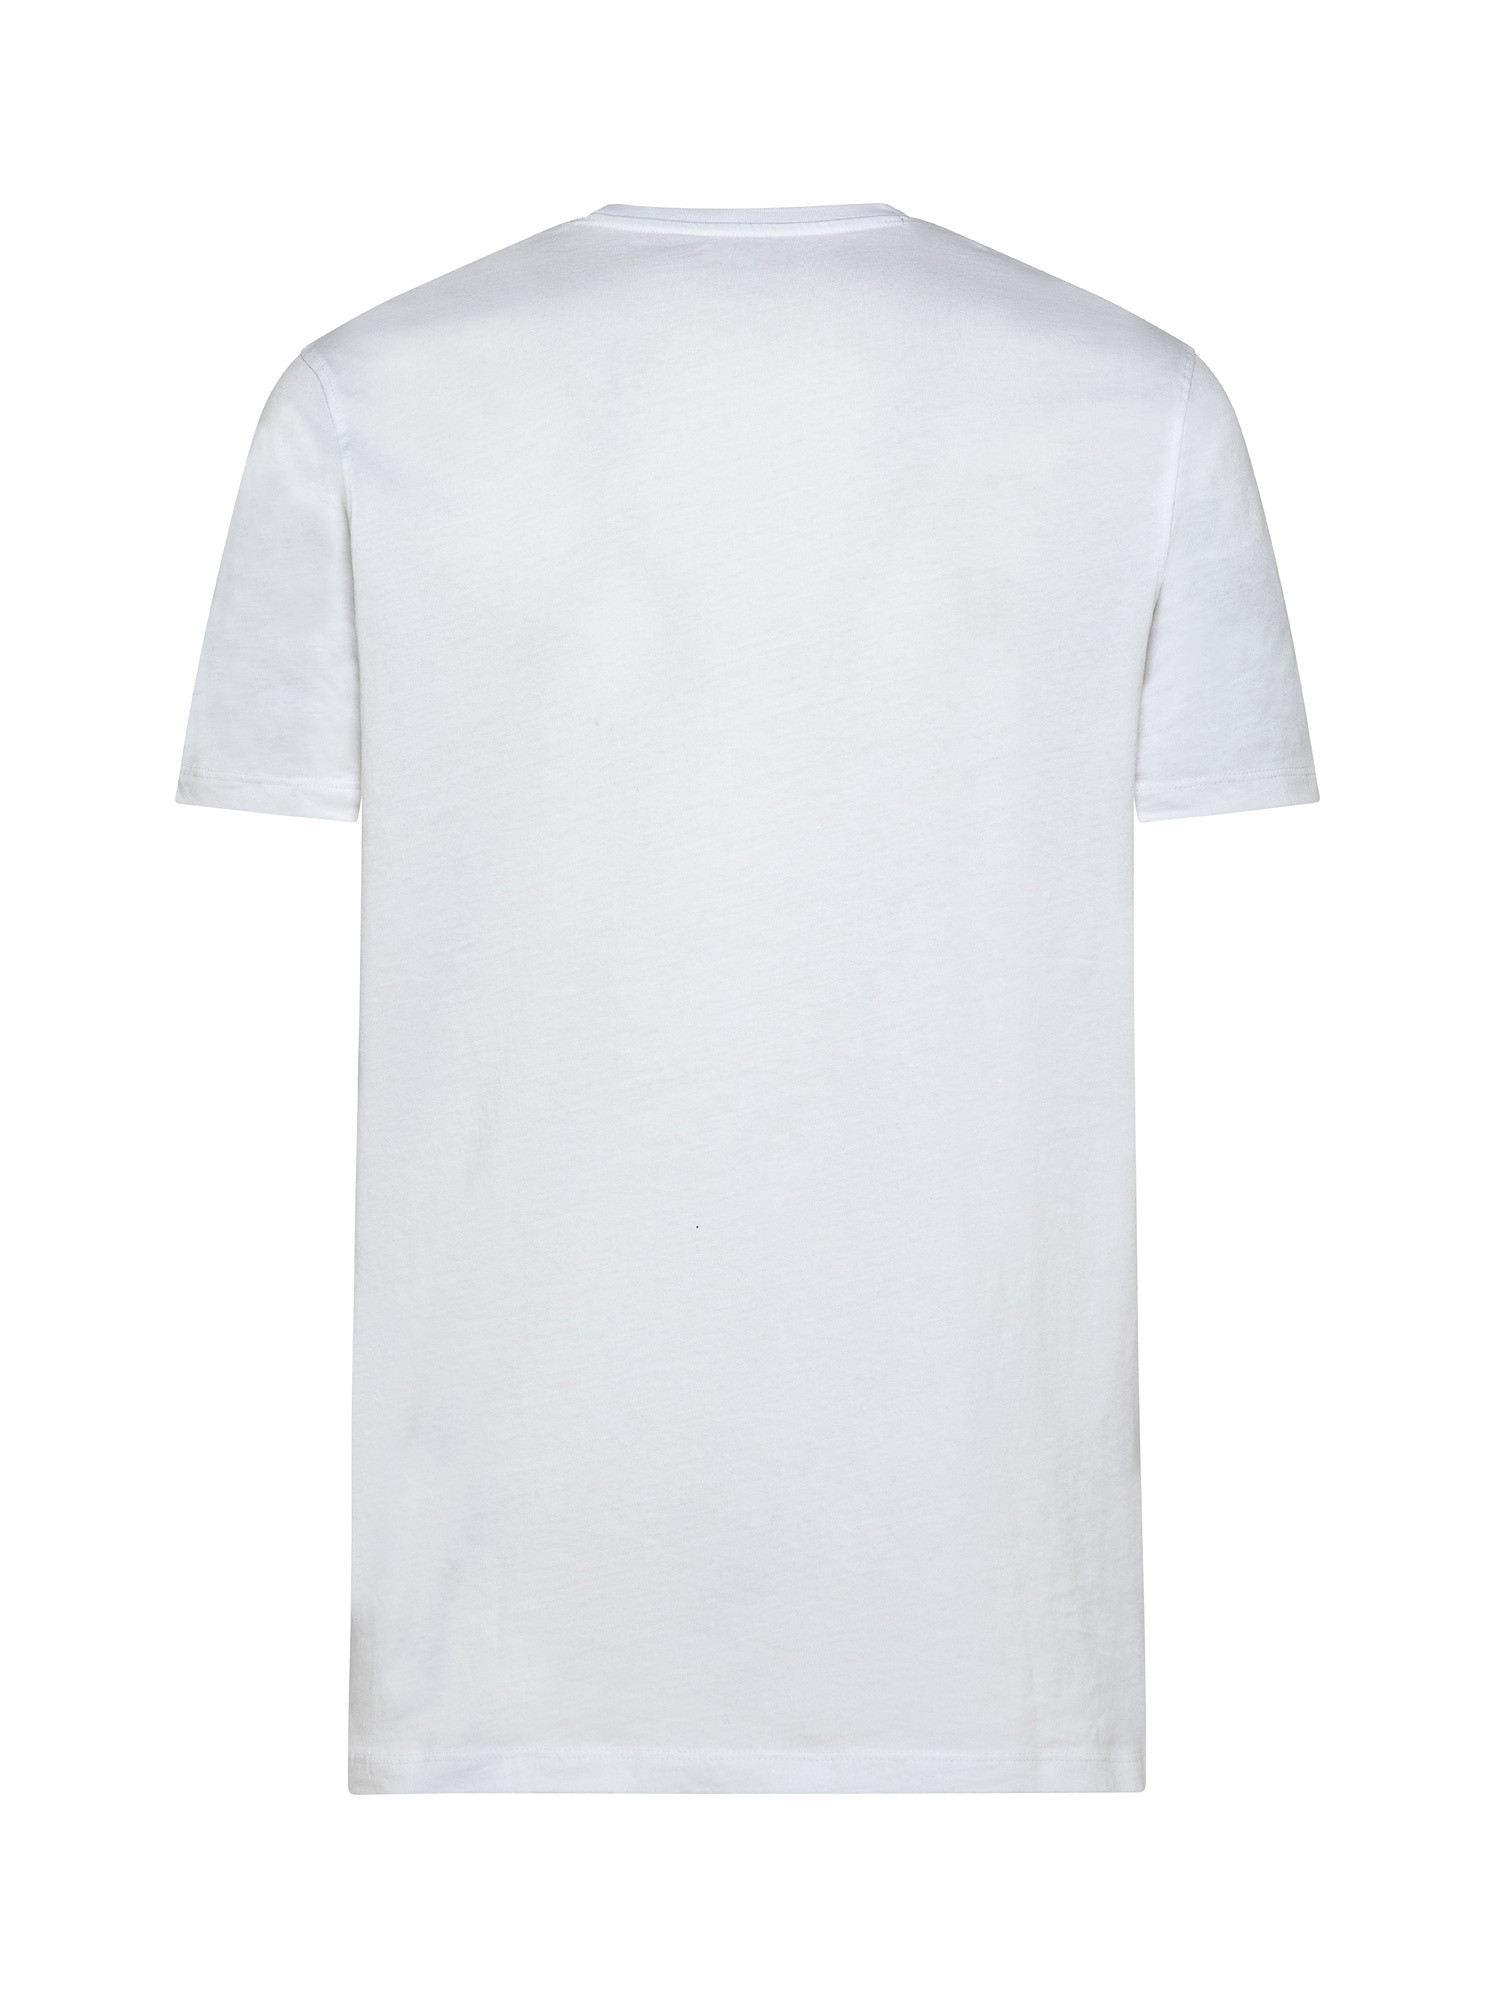 T-shirt scollo V cotone supima tinta unita, Bianco, large